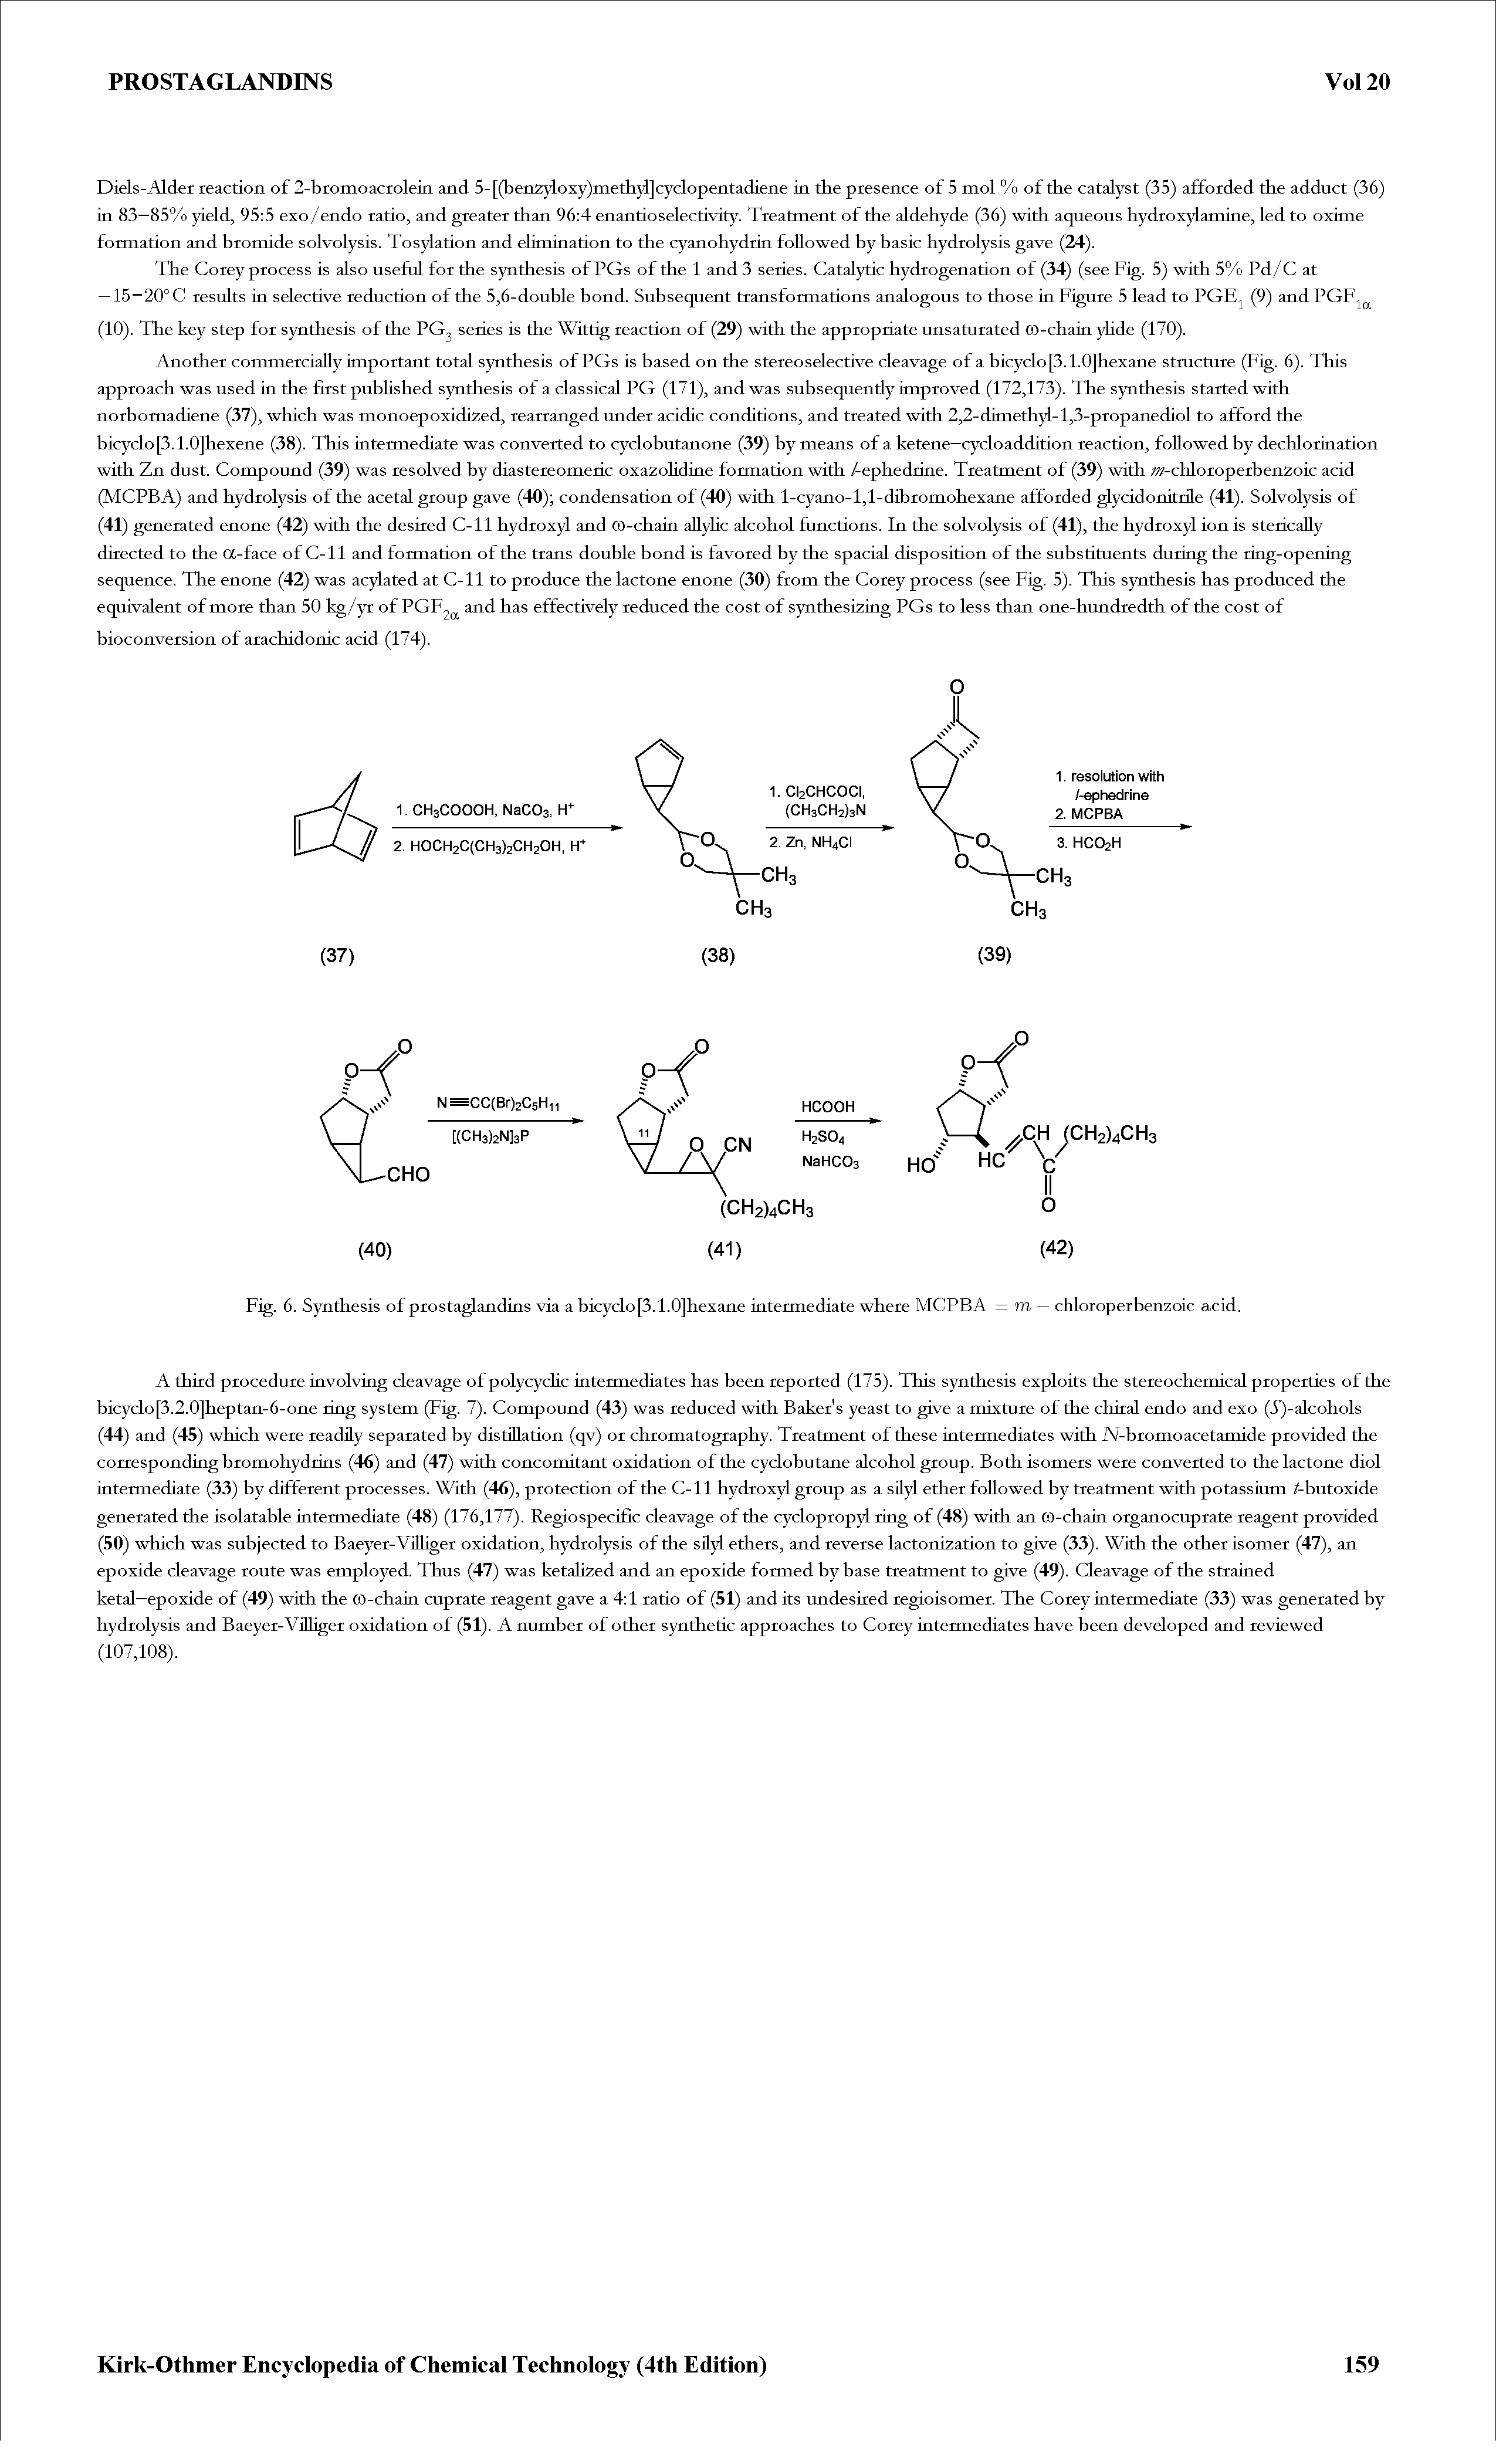 Fig. 6. Synthesis of prostaglandins via a bicyclo[3.1.0]hexane intermediate where MCPBA = m — chloroperbenzoic acid.